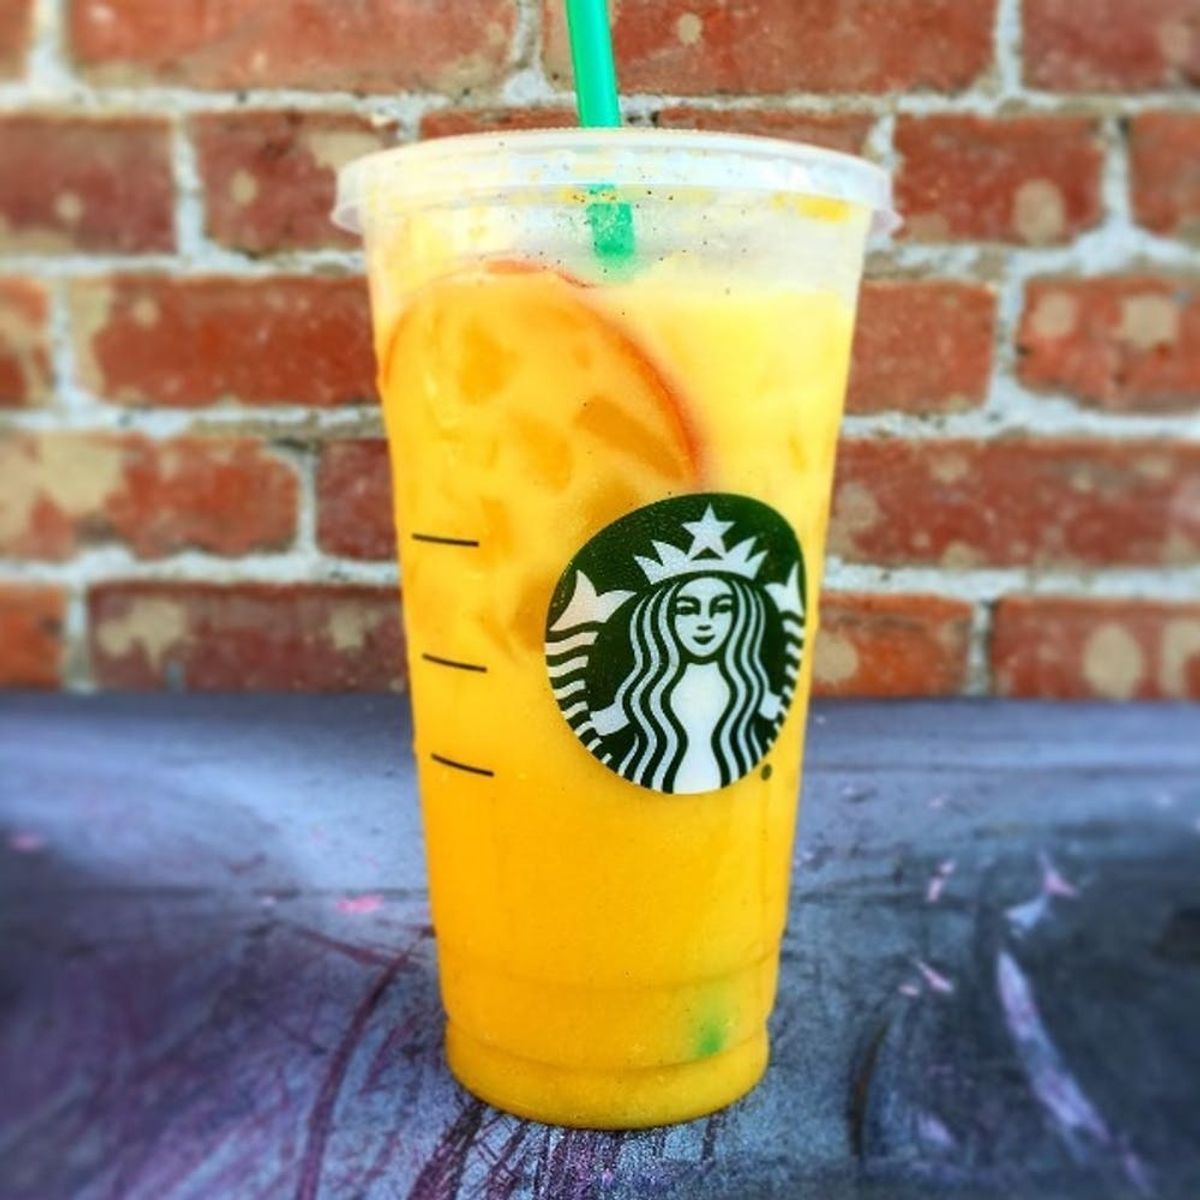 Starbucks’ New Mystery Orange Beverage Joins the Tasty Summer Drink Trend